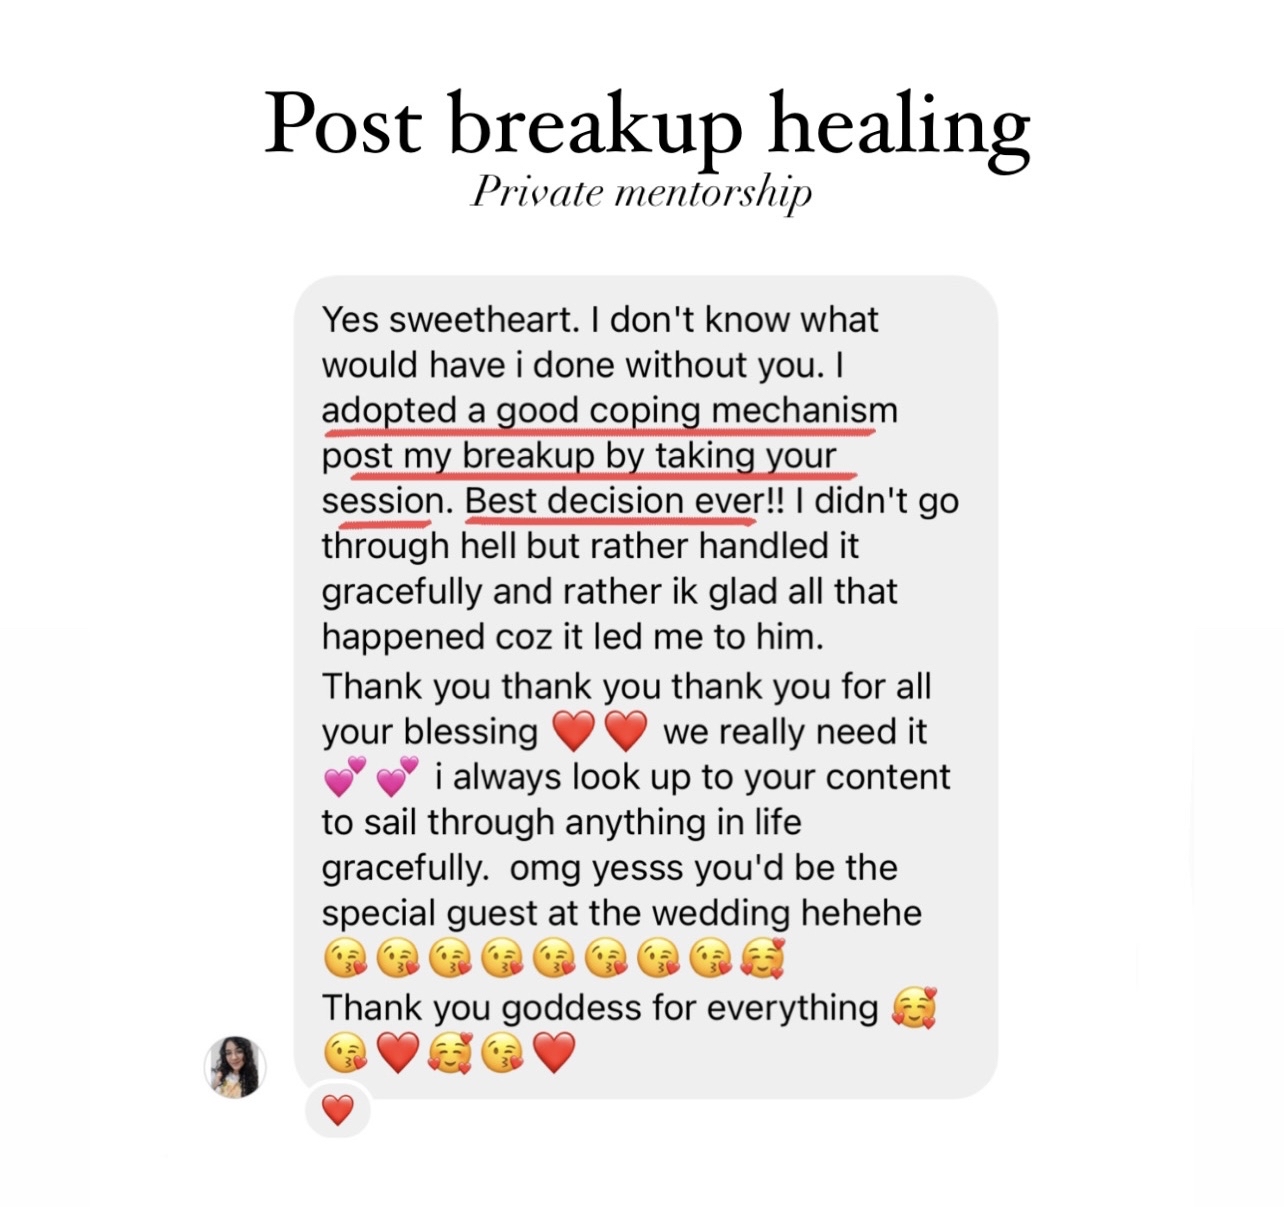 Post breakup healing mentorship 